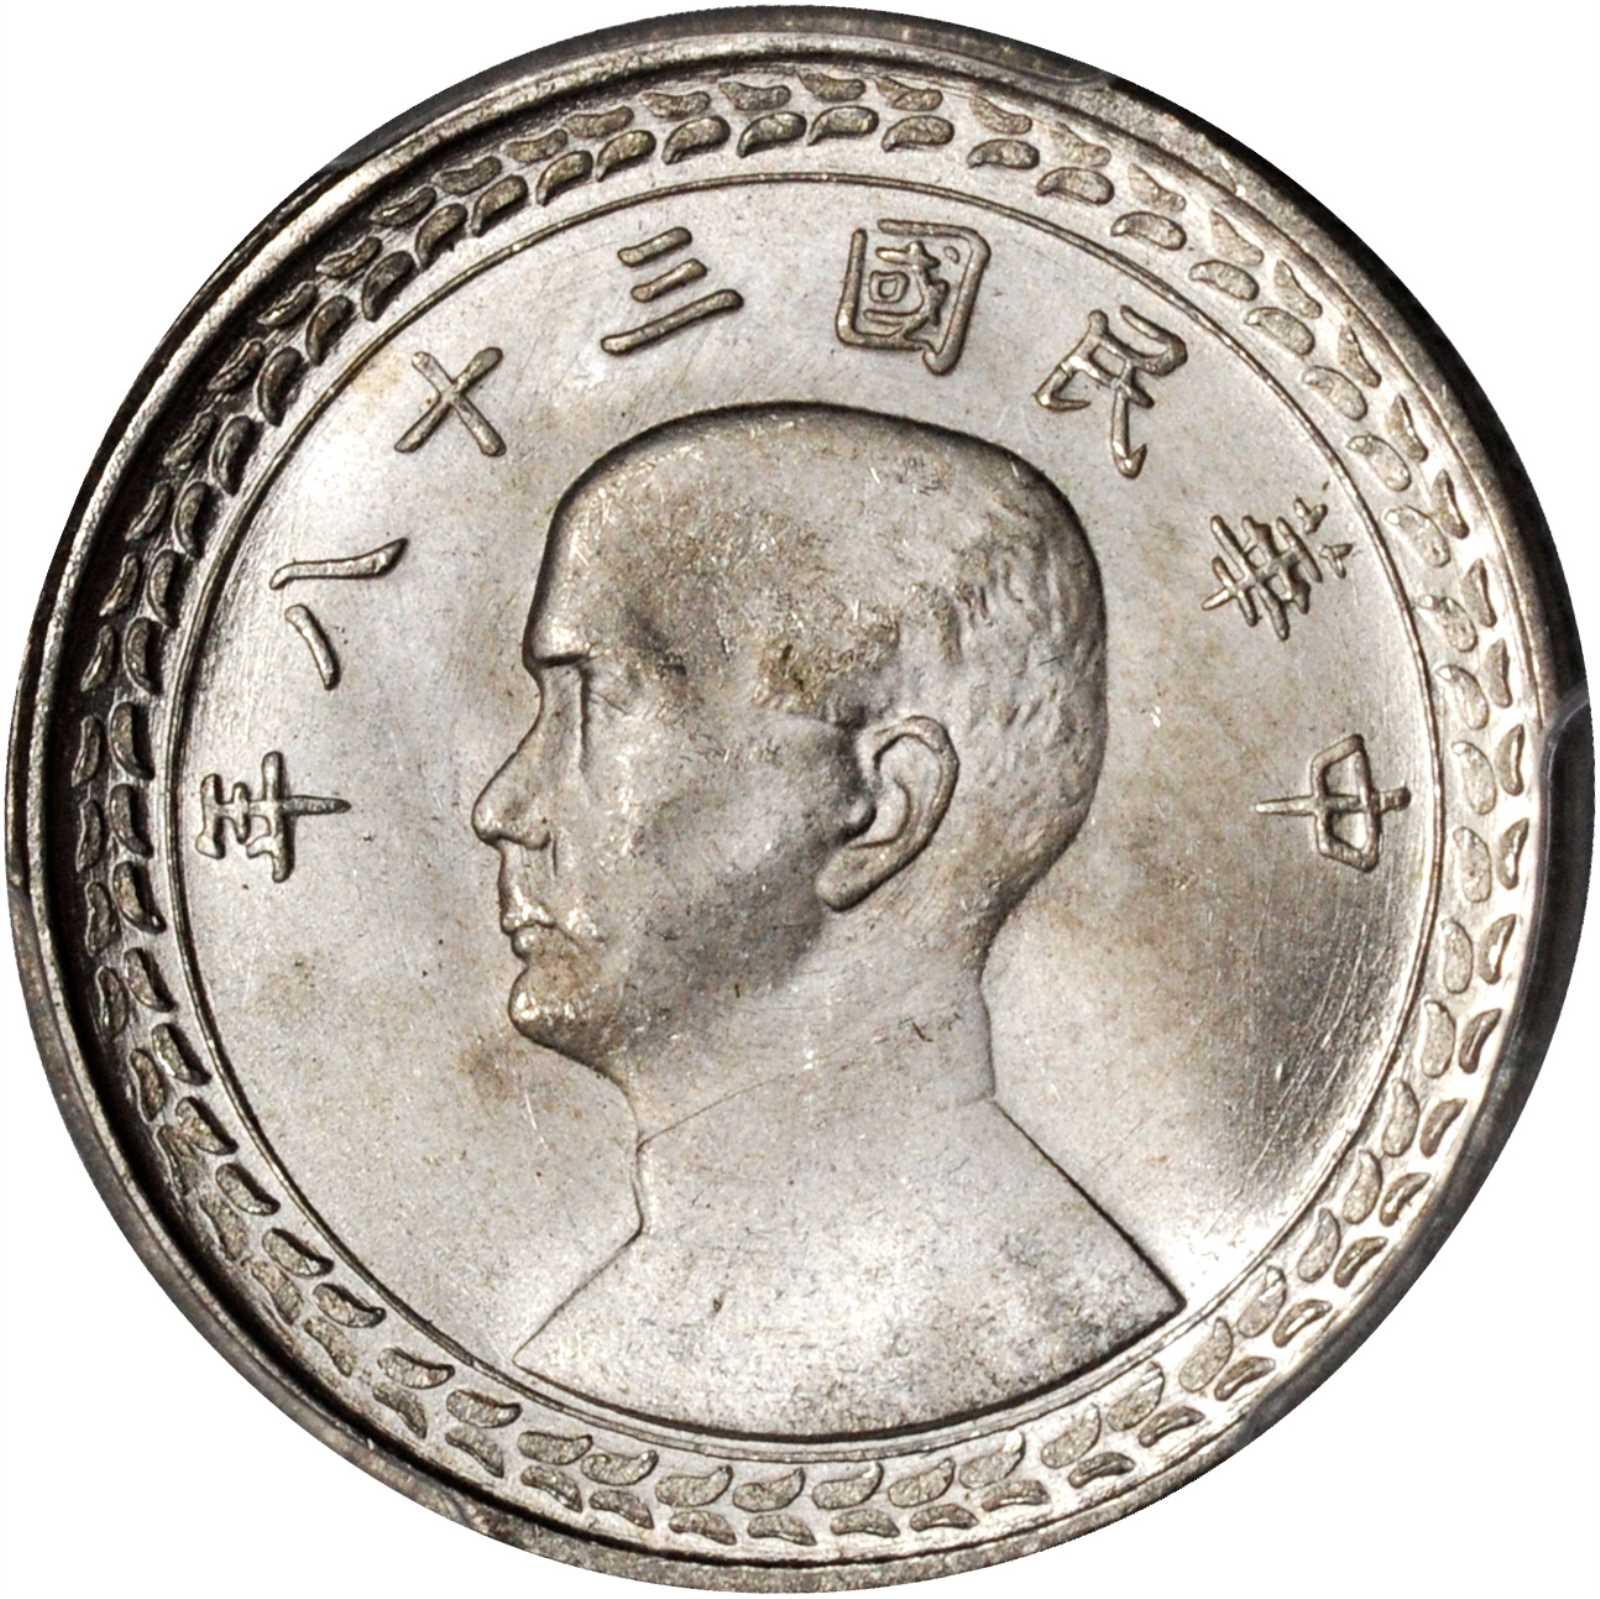 CHINA. Taiwan. 5 Chiao (50 Cents), Year 38 (1949). PCGS MS-65